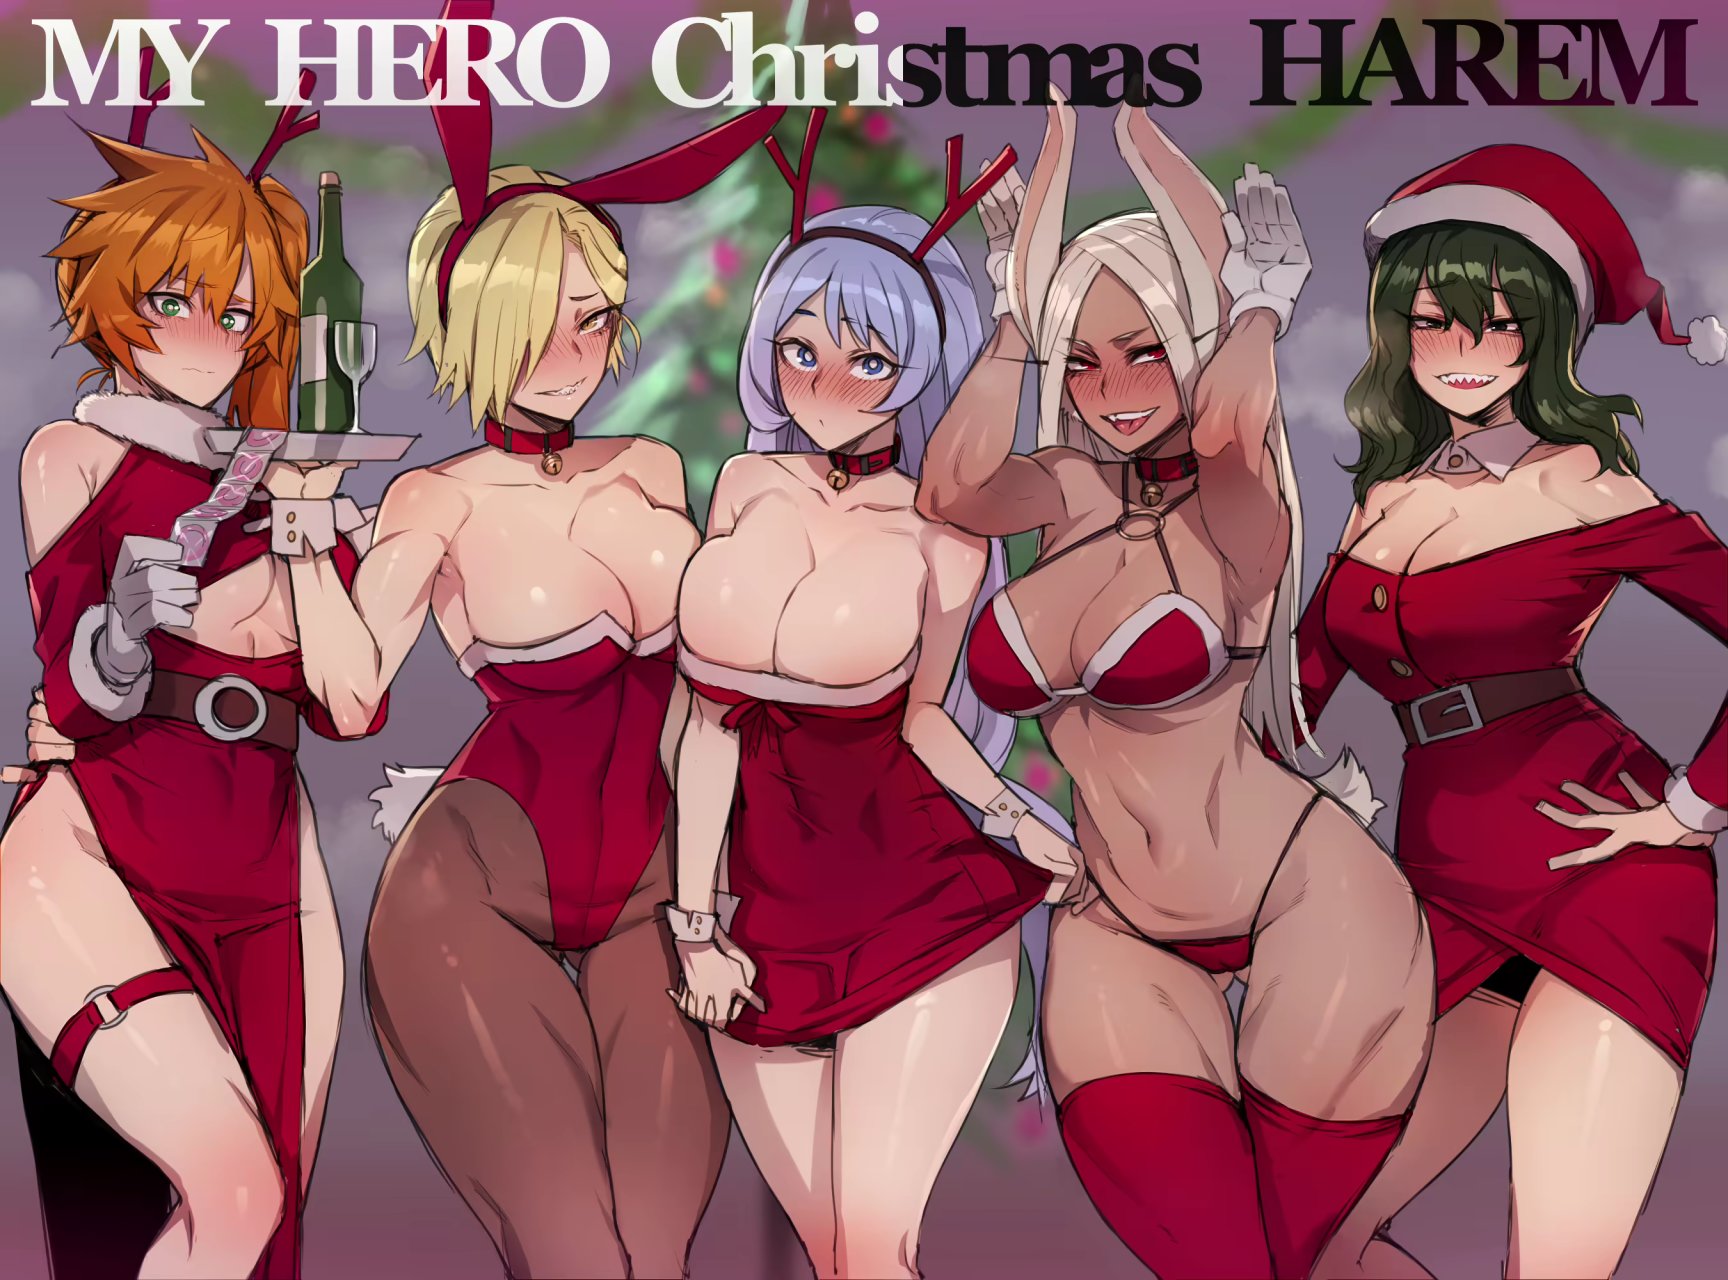 MY HERO Christmas HAREM - 0